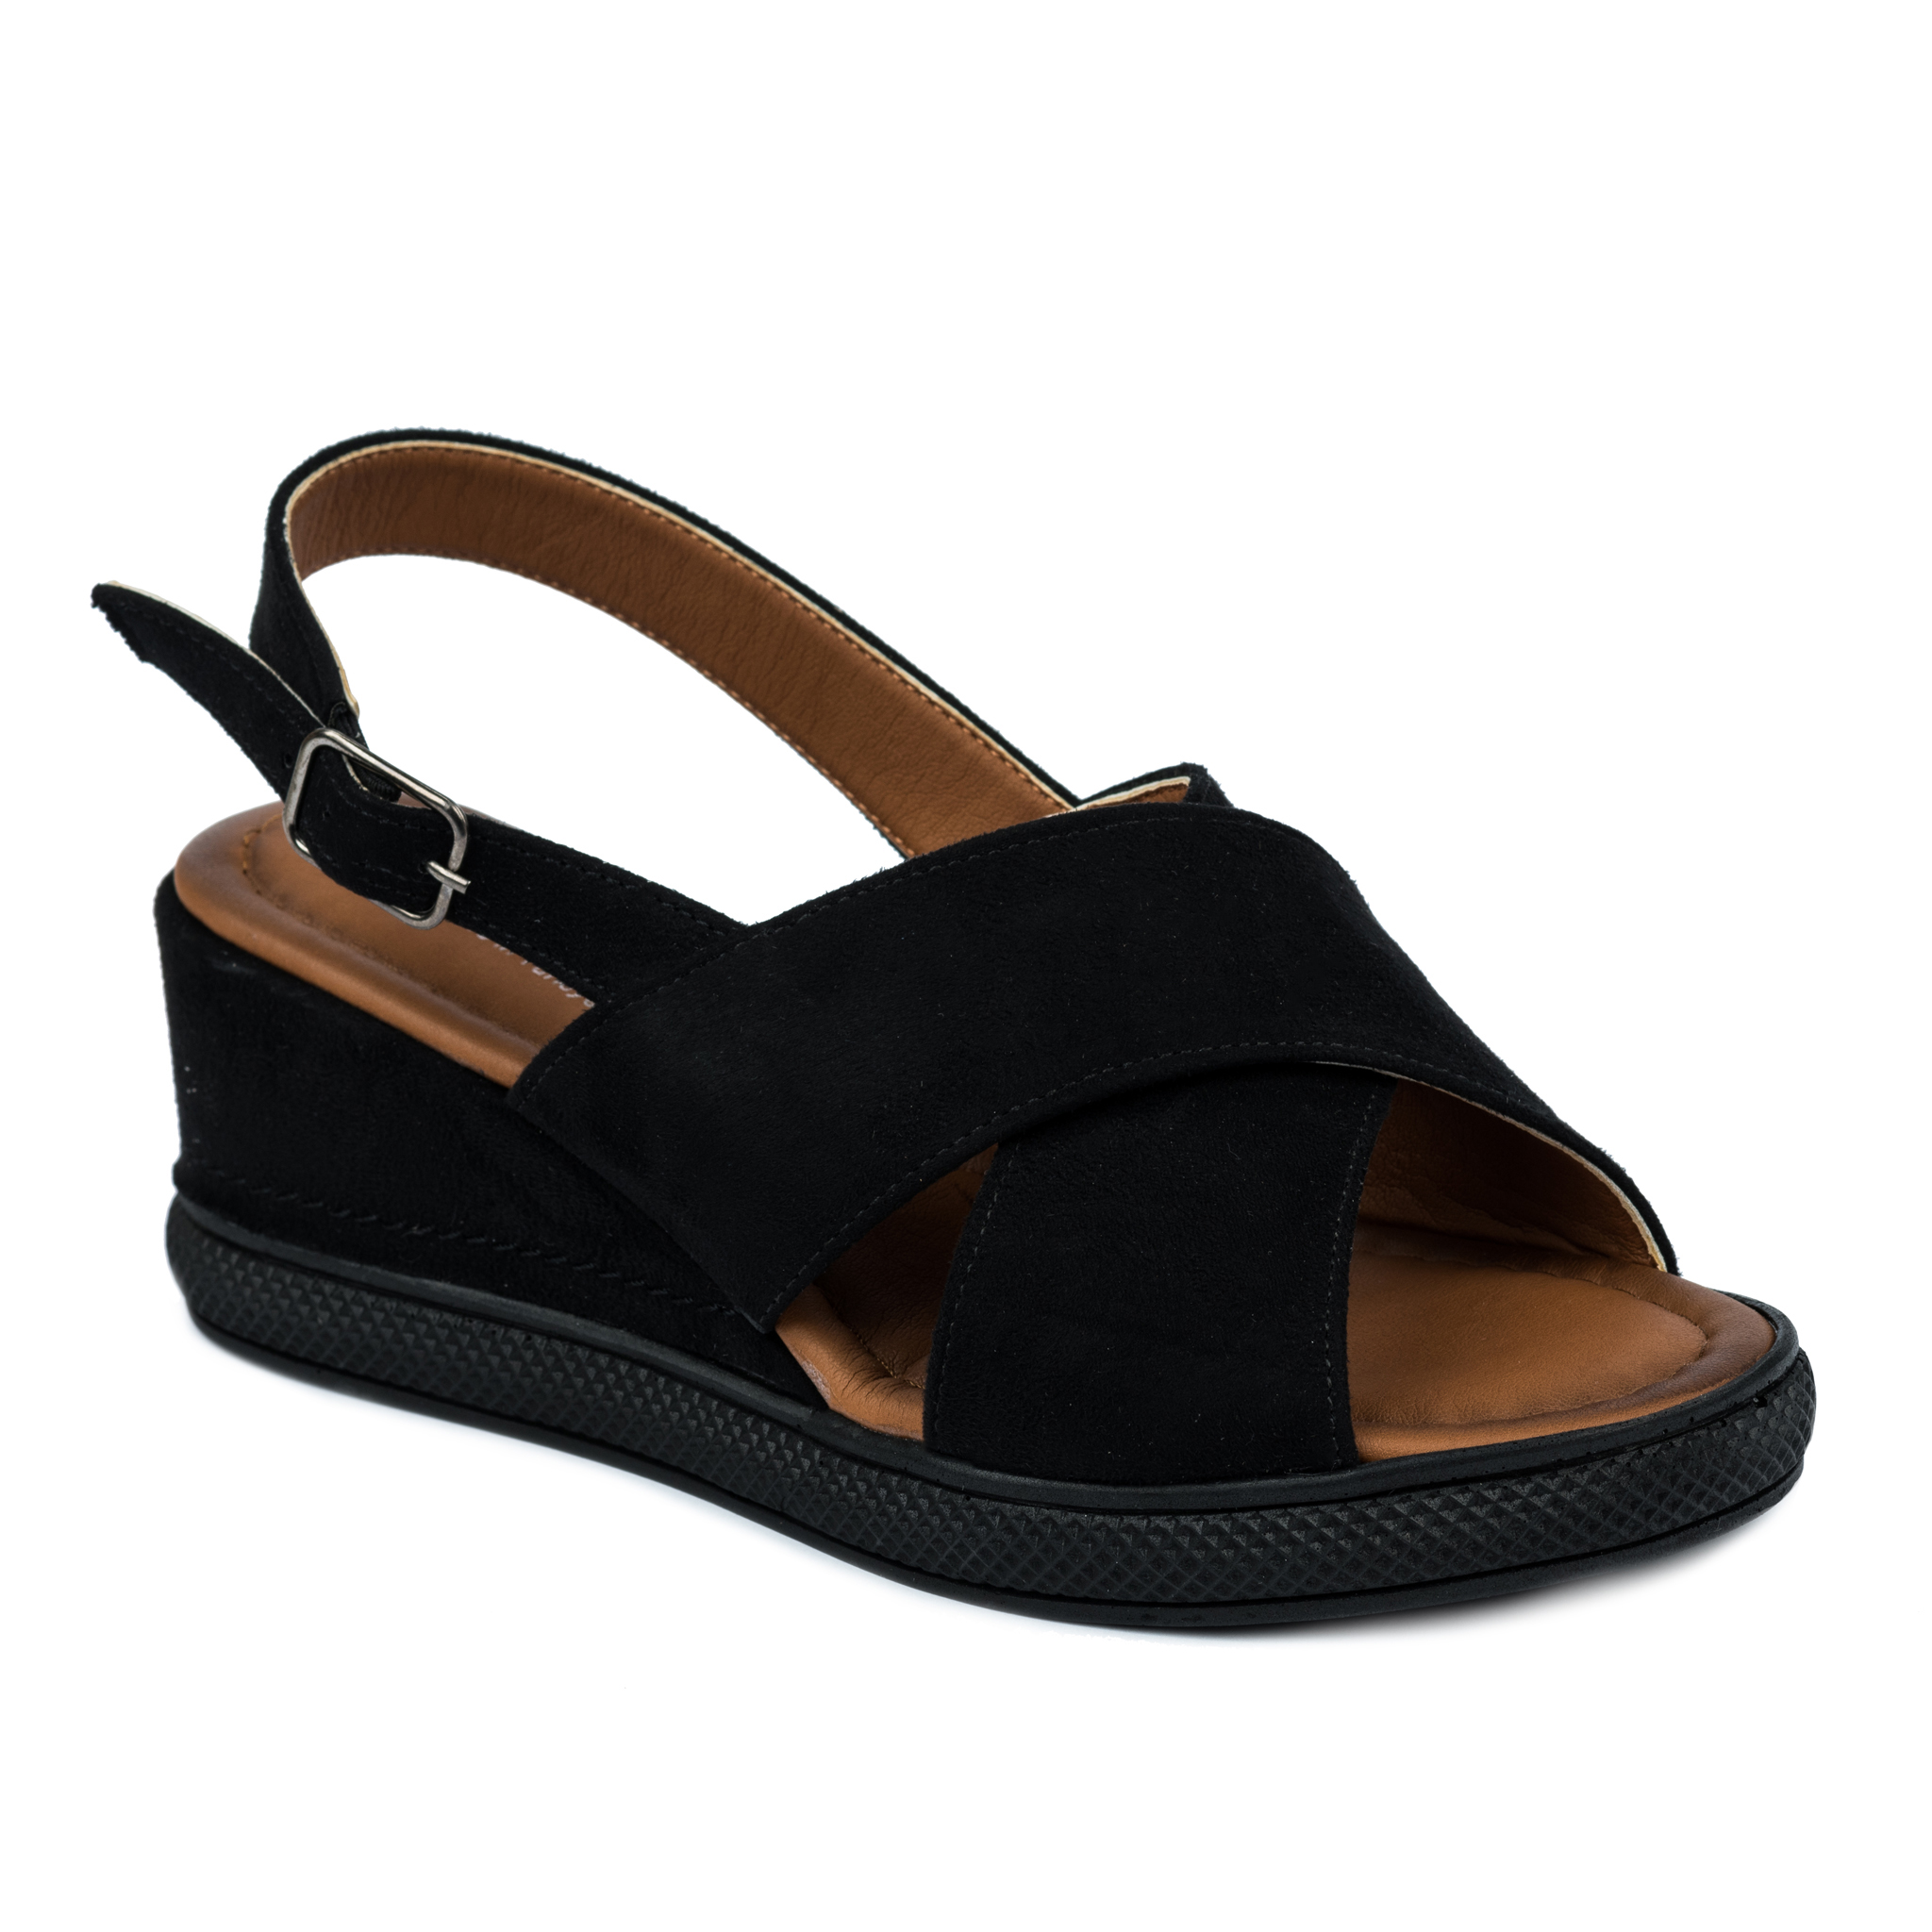 Women sandals A780 - BLACK